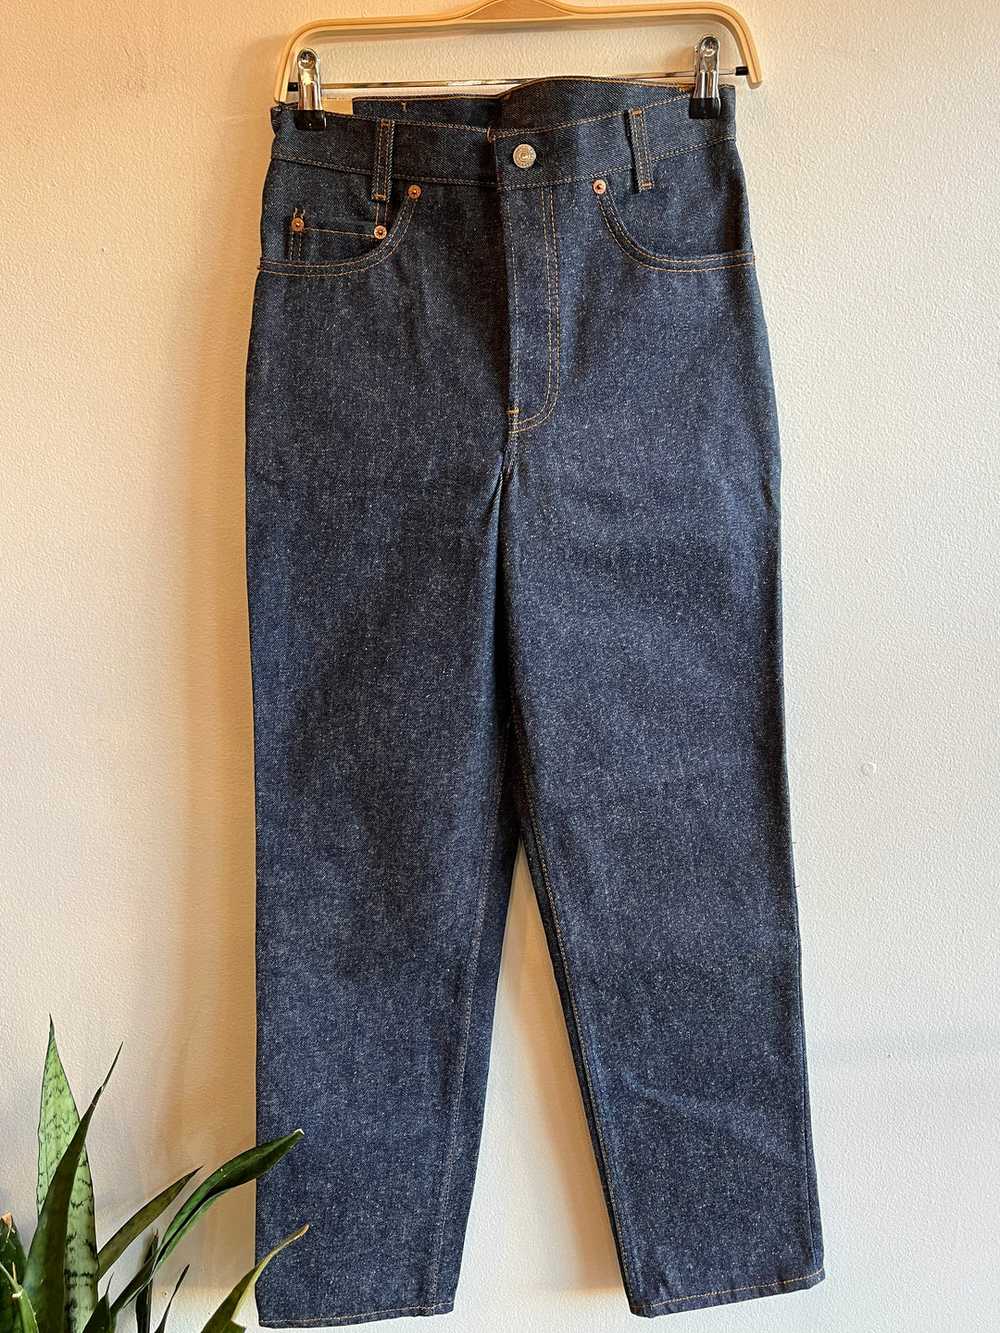 Vintage 1980’s Deadstock Levi’s 701 Denim Jeans - Gem